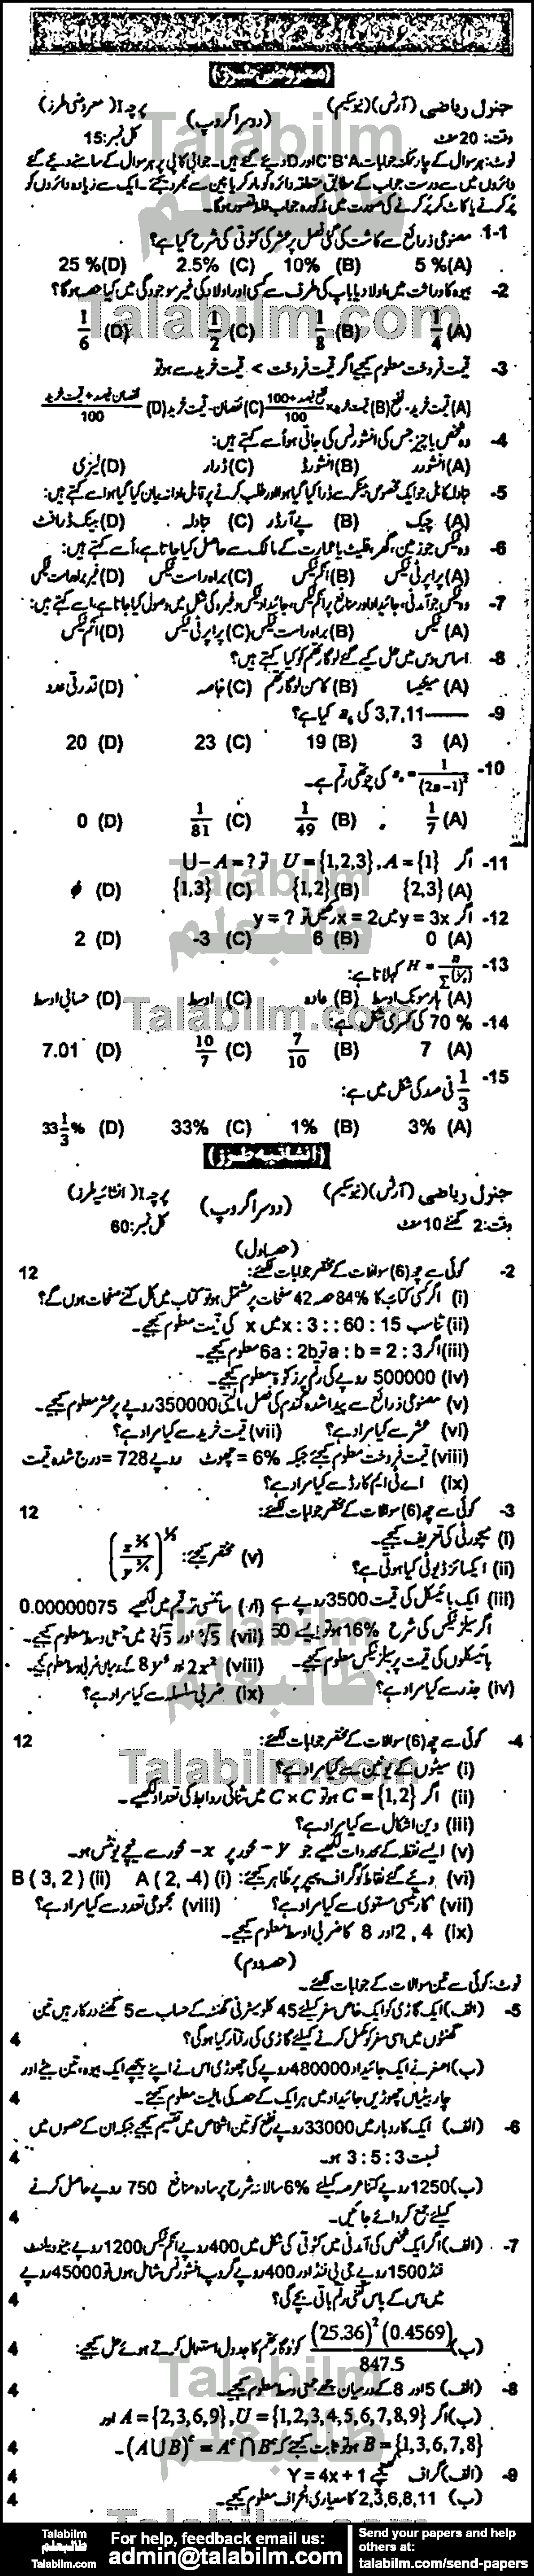 General Math 0 past paper for Urdu Medium 2014 Group-II